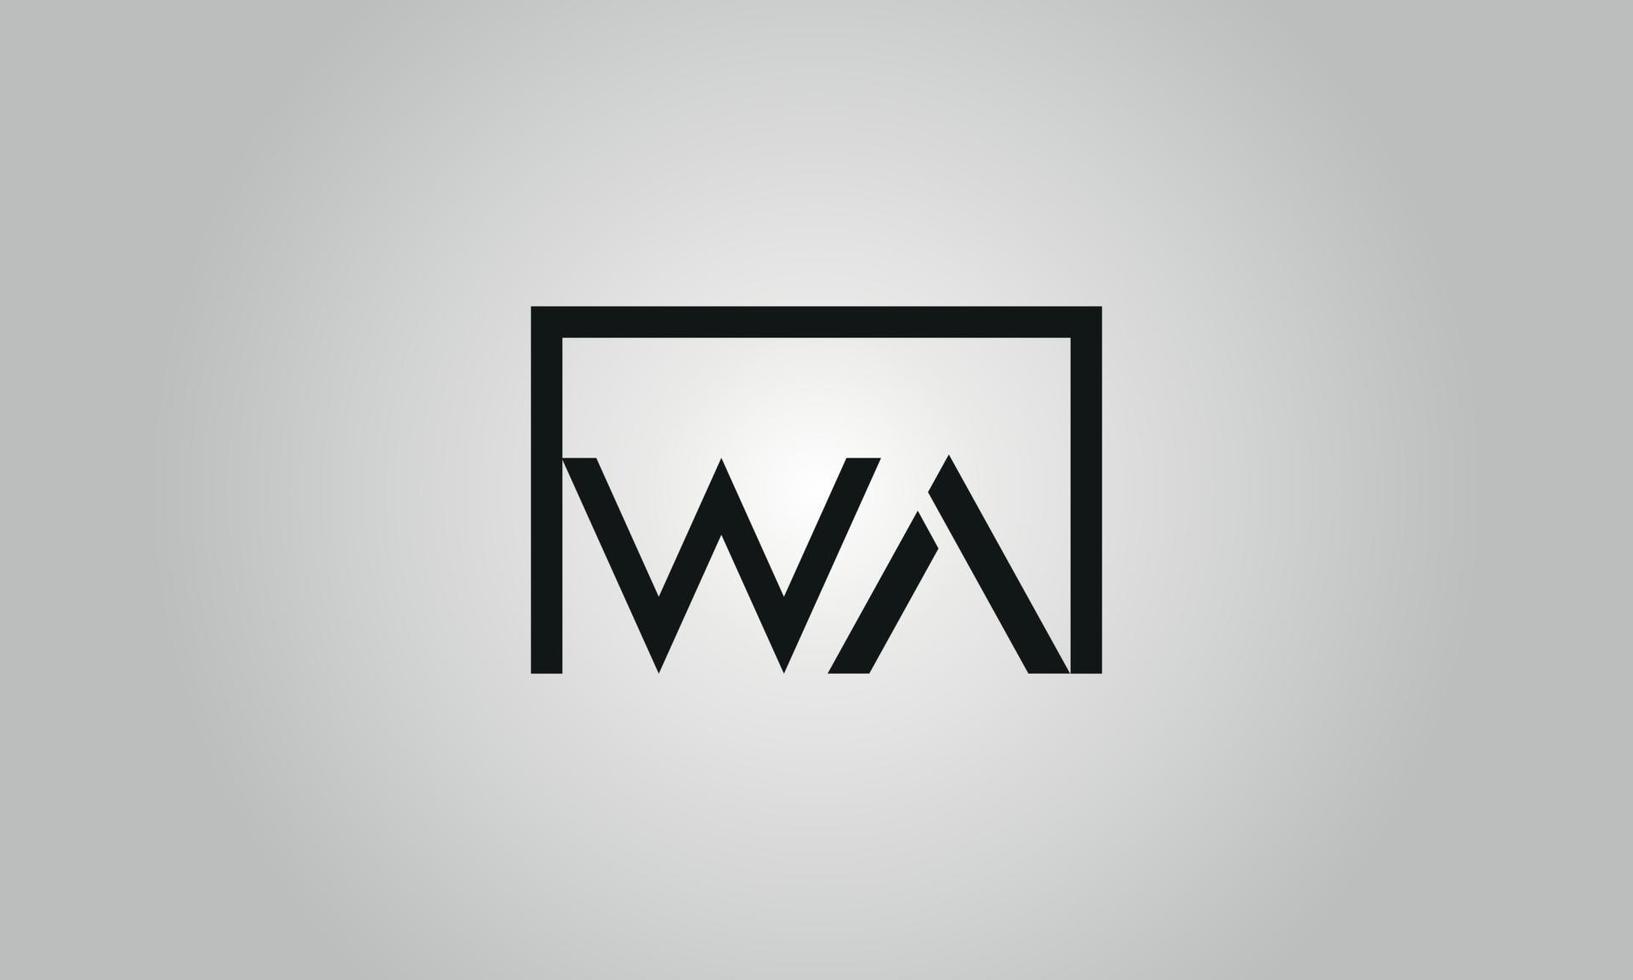 Letter WA logo design. WA logo with square shape in black colors vector free vector template.